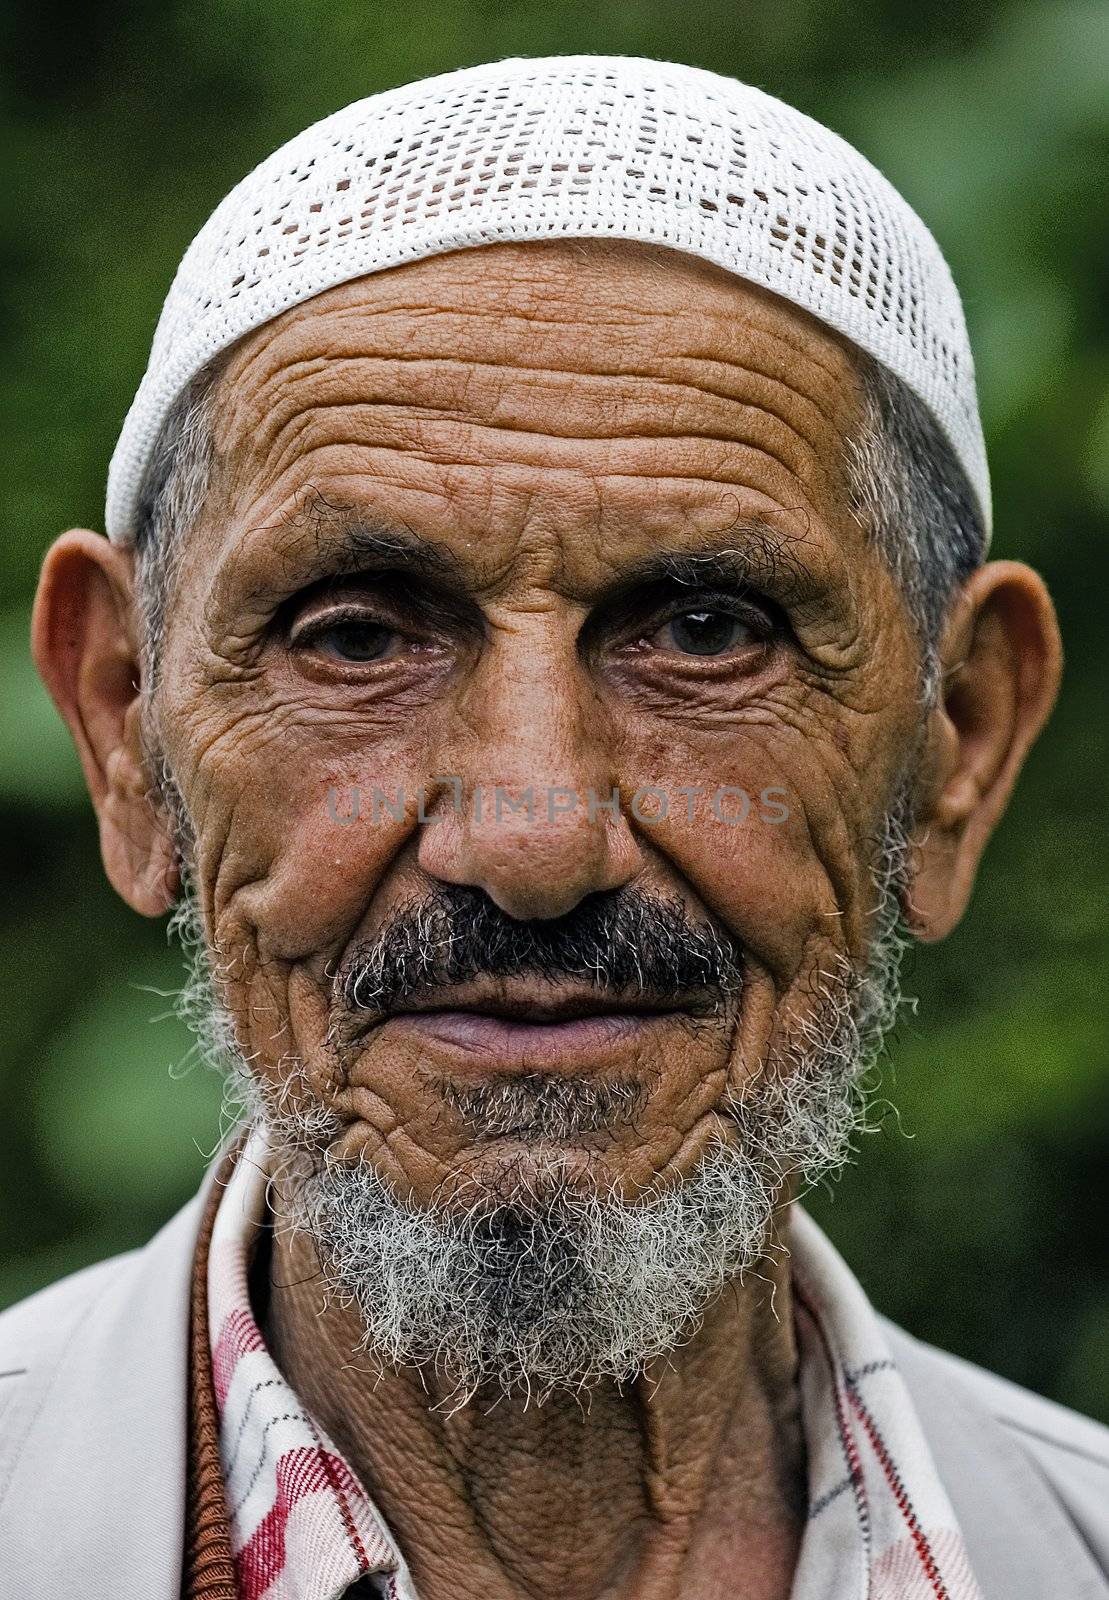 Turkish man by kobby_dagan